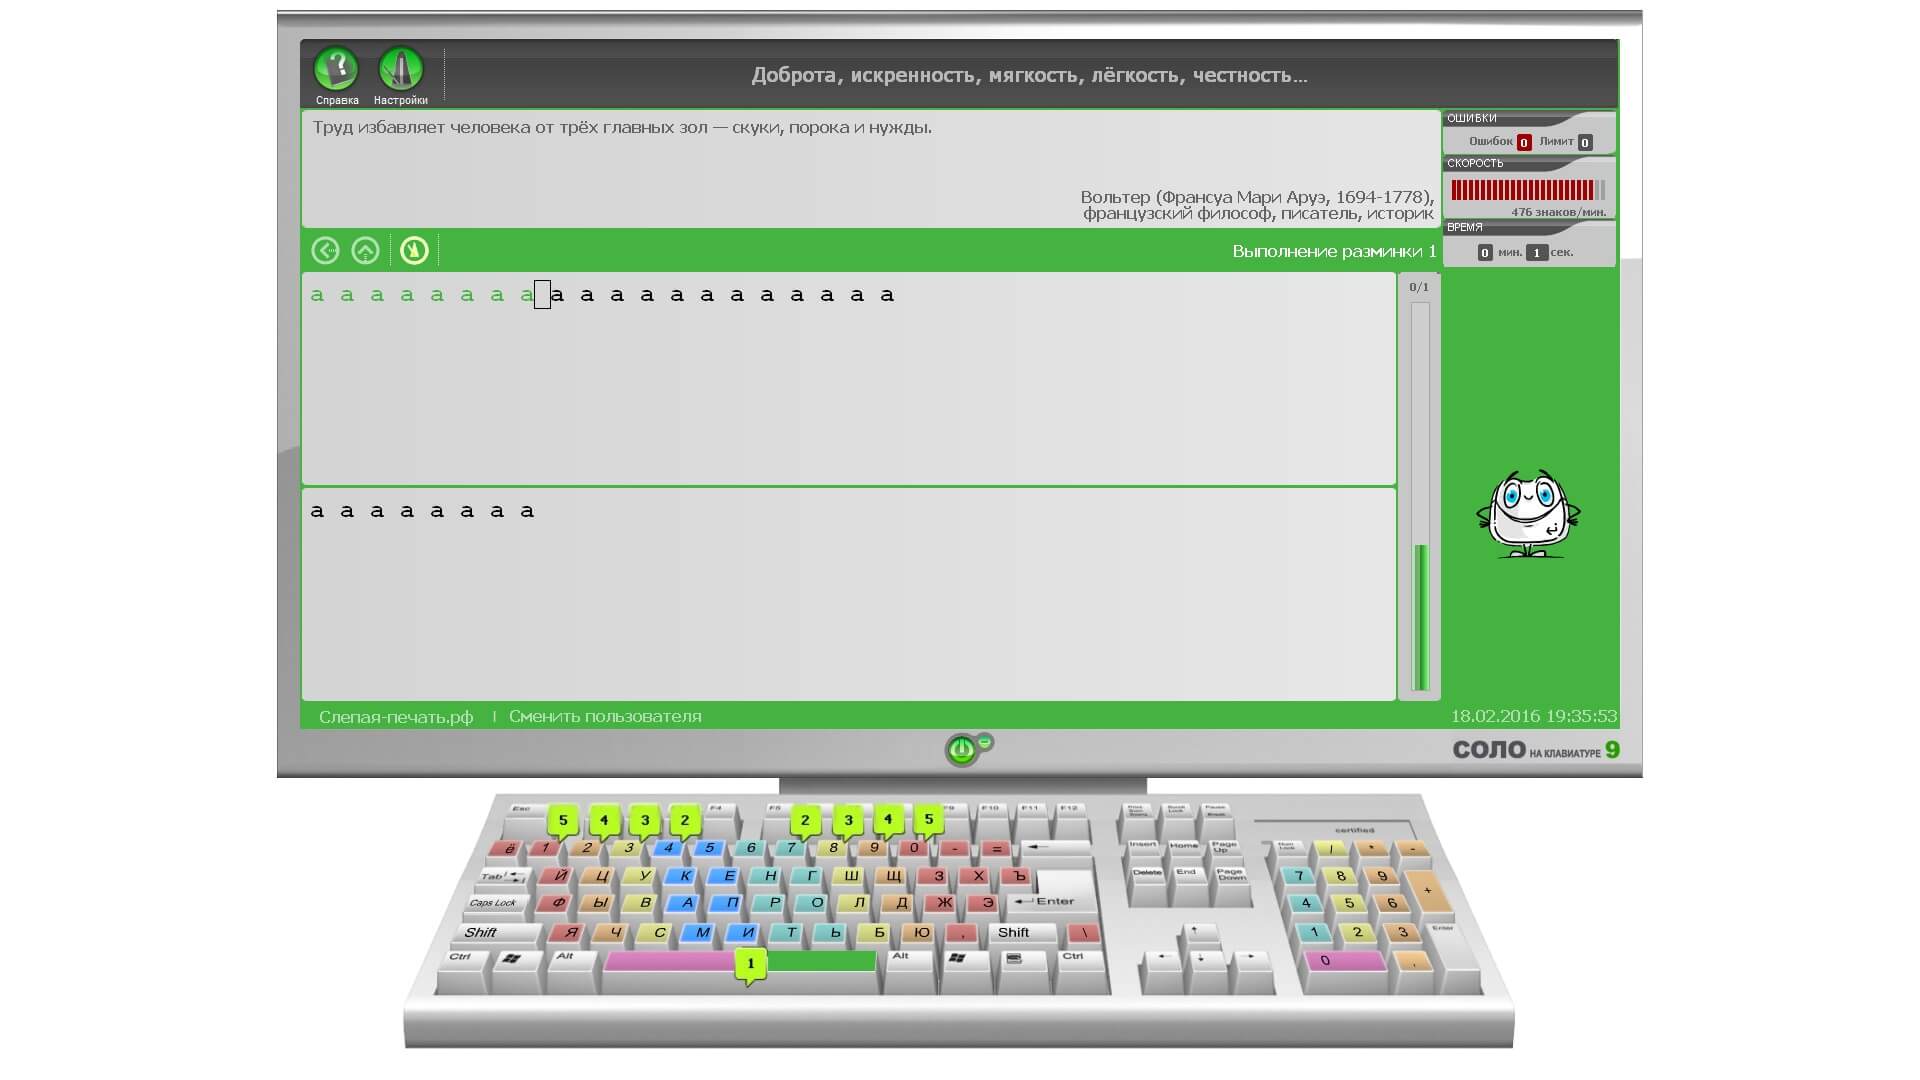 Скриншот клавиатурного тренажера Соло на клавиатуре 9